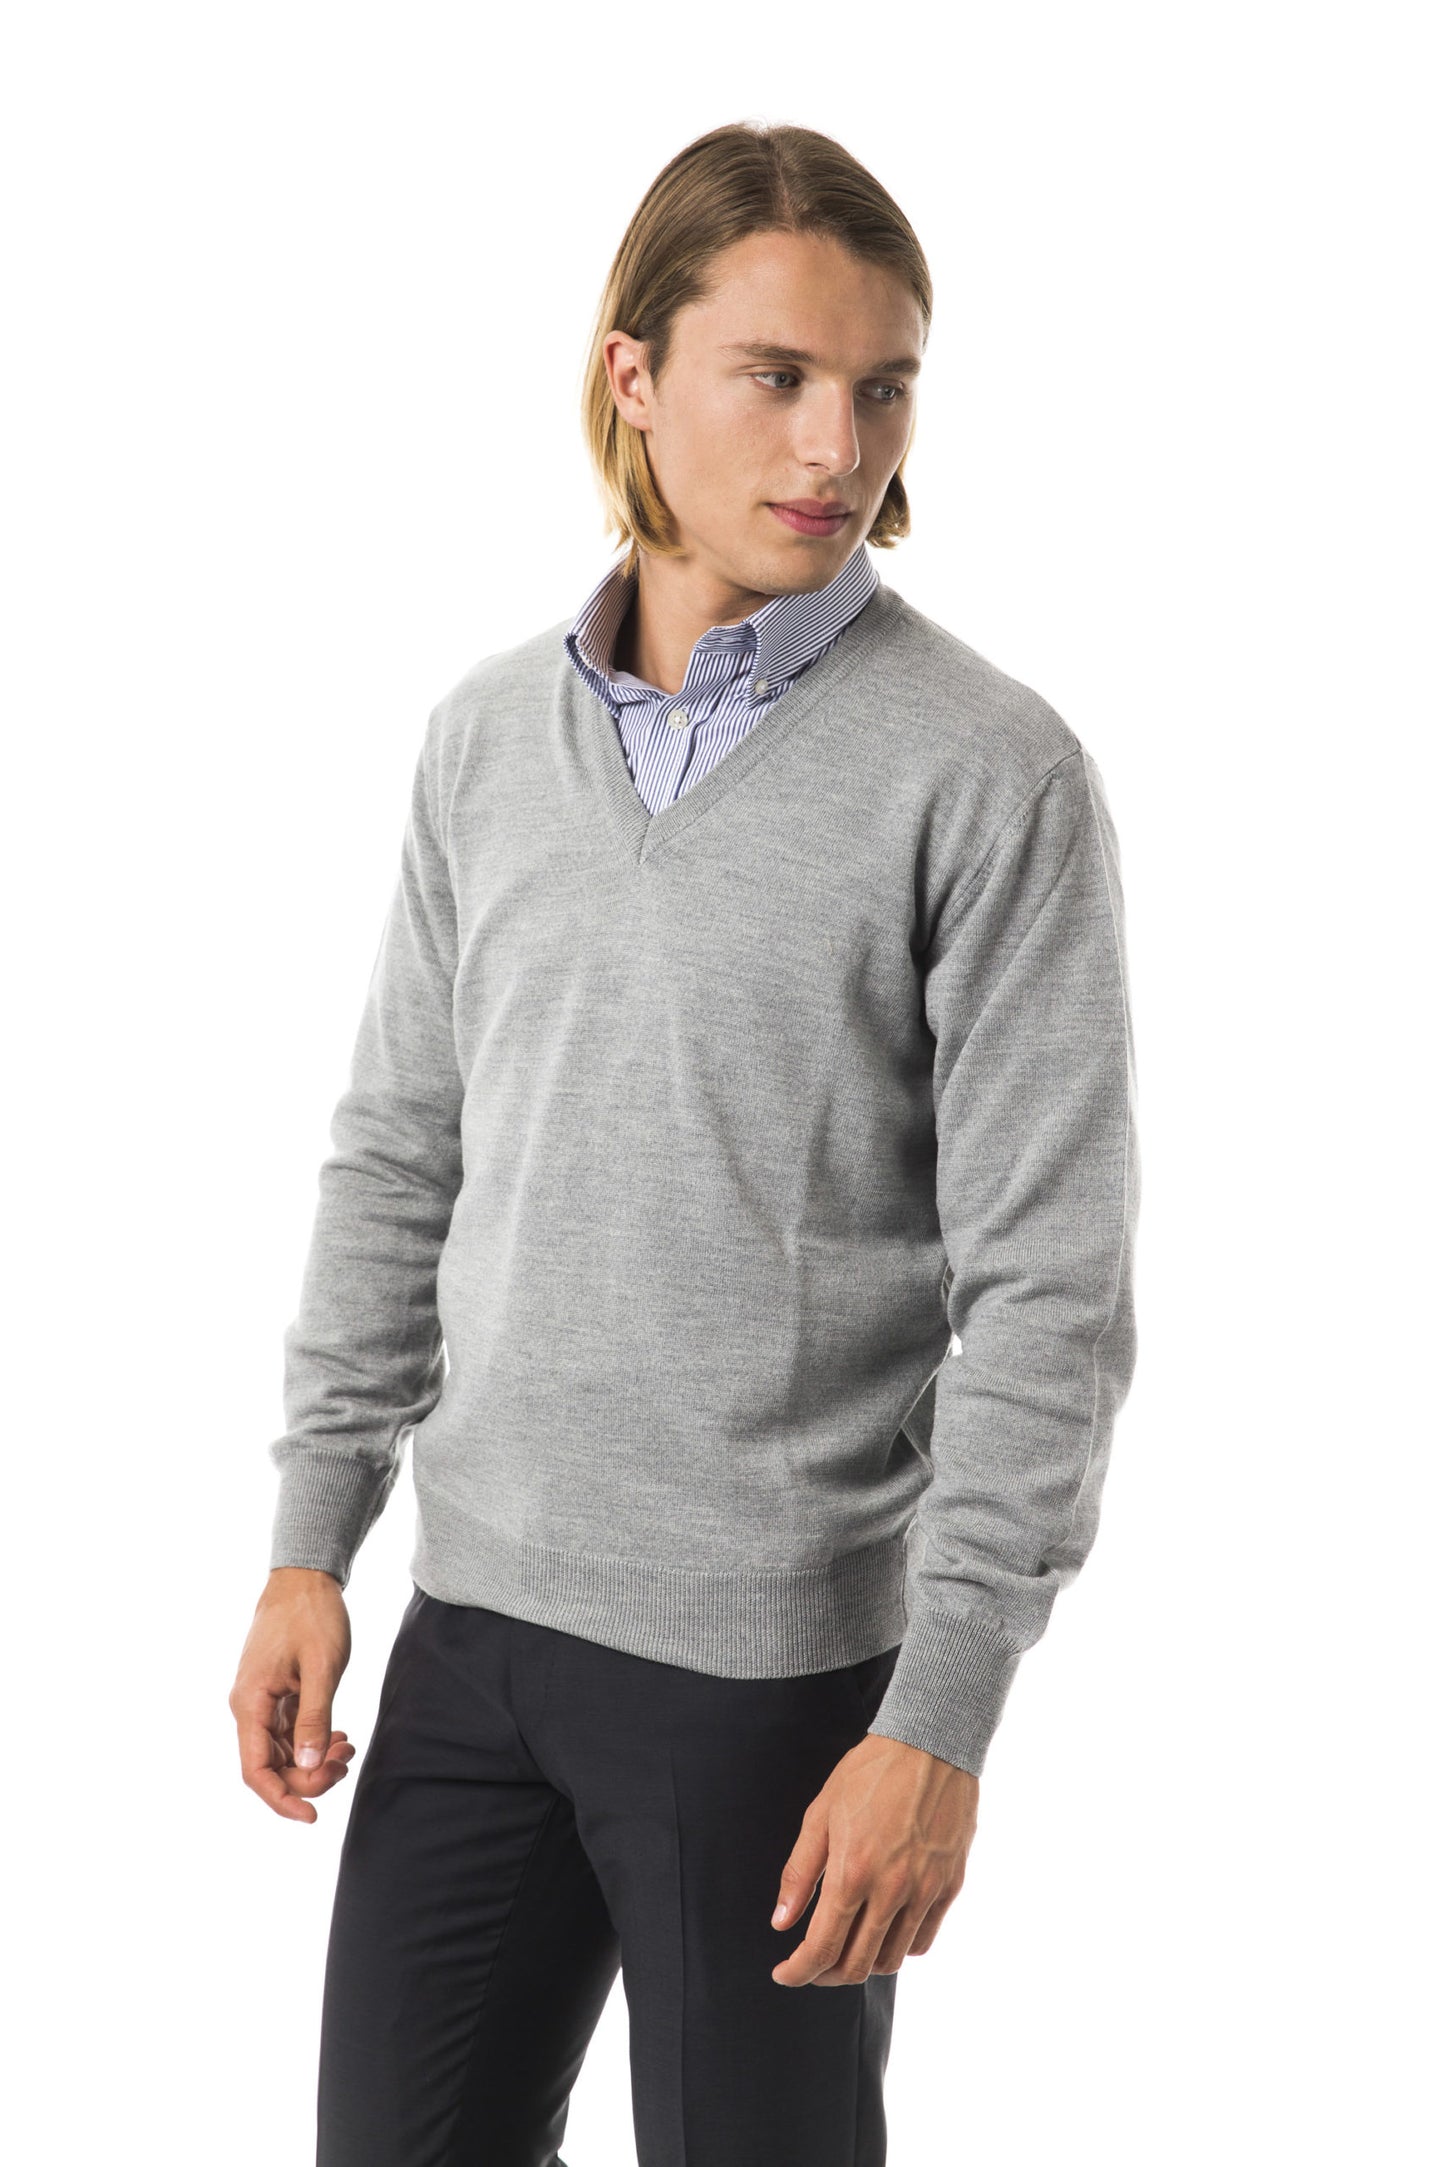 Gray Grimd Sweater